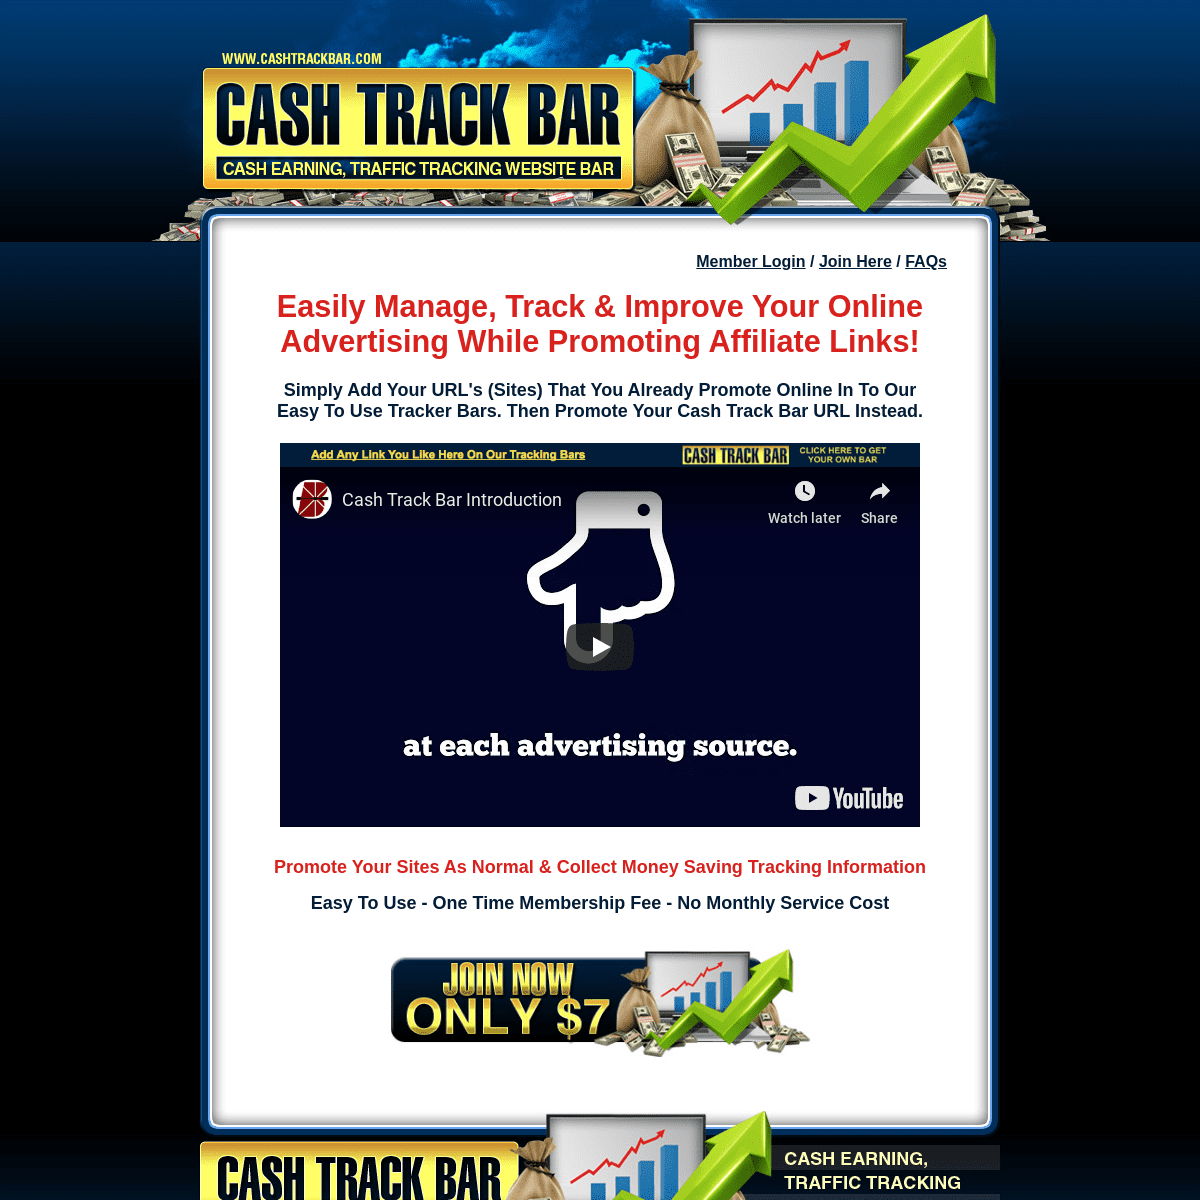 A complete backup of cashtrackbar.com